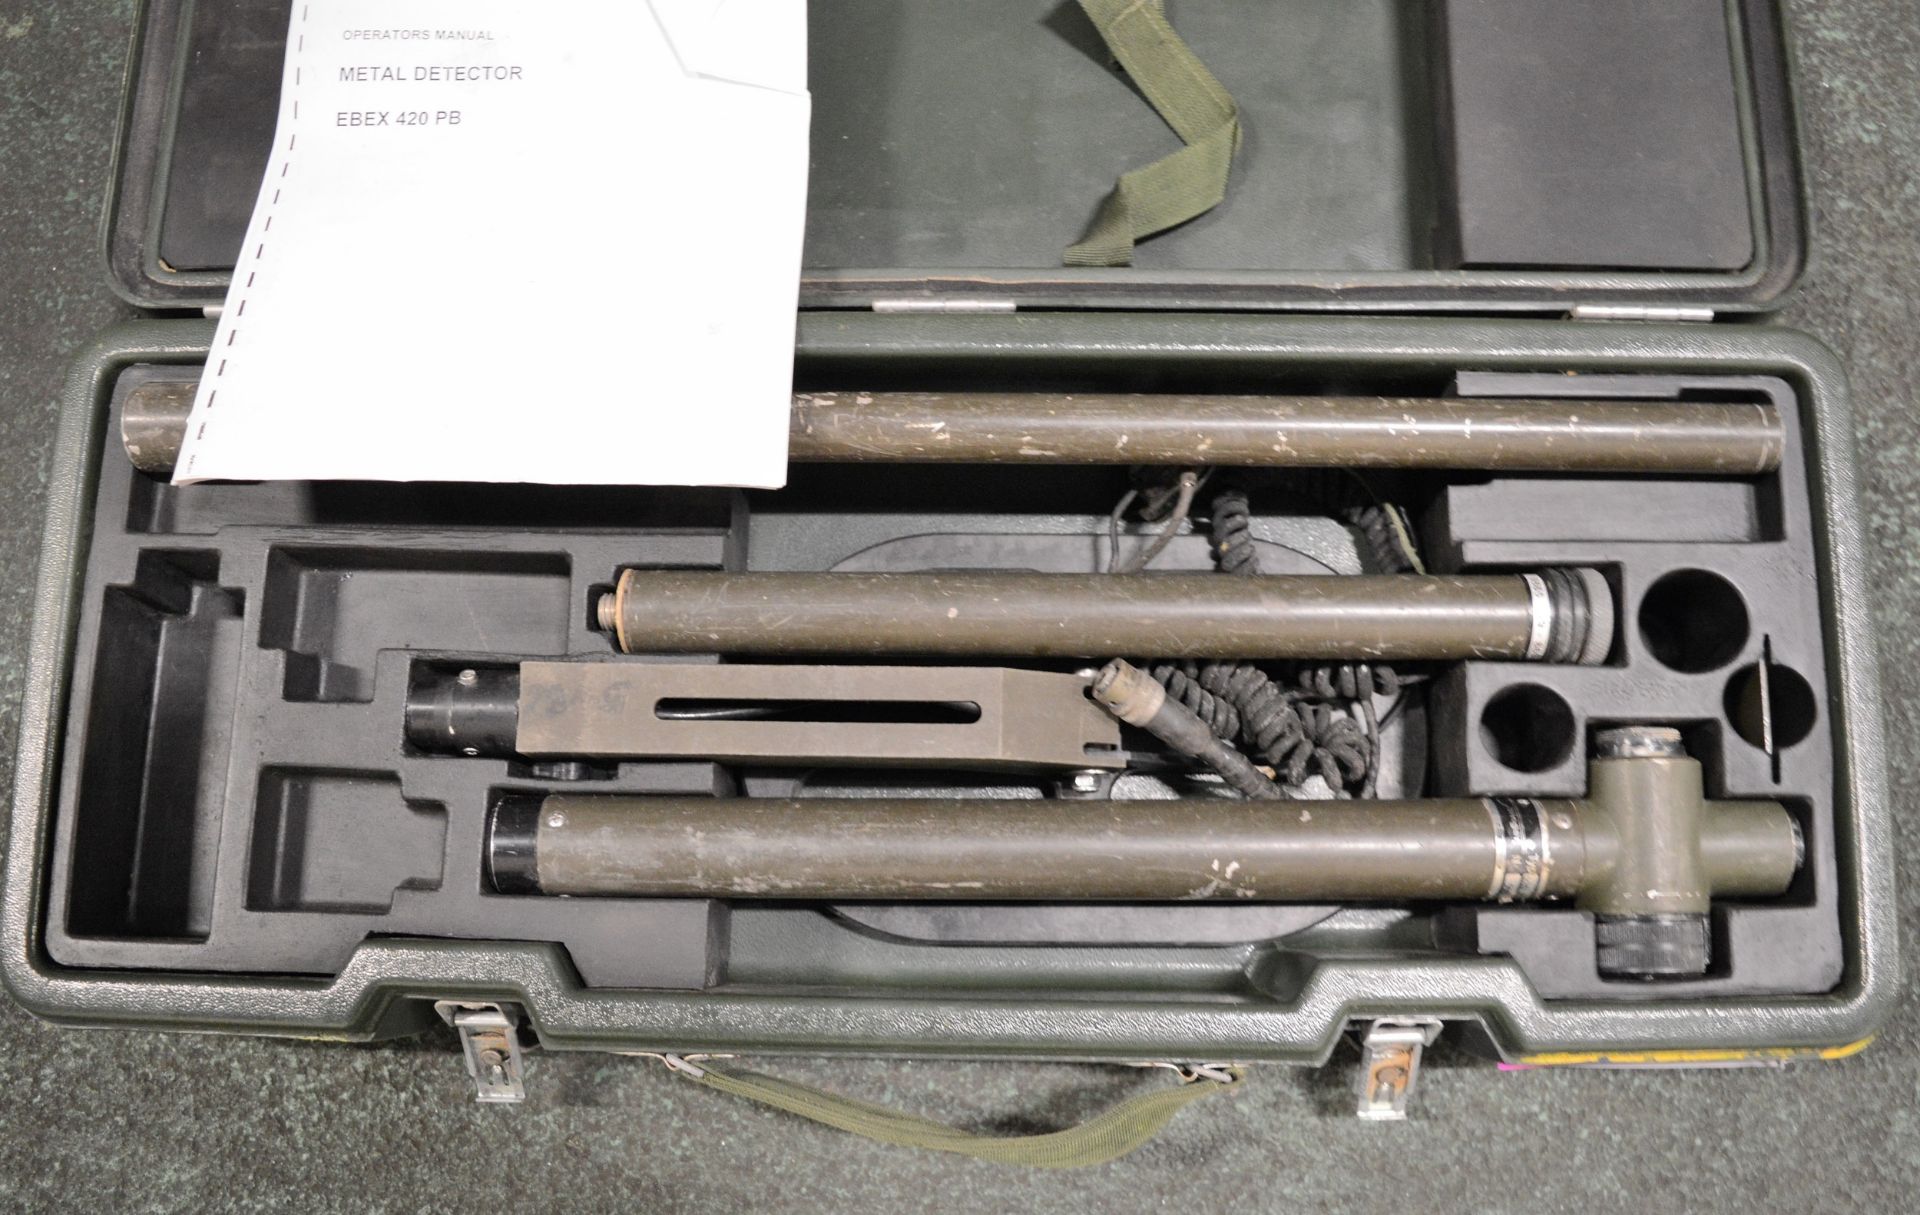 Binger Metal detector EBEX 420PB in case - incomplete - Image 4 of 4